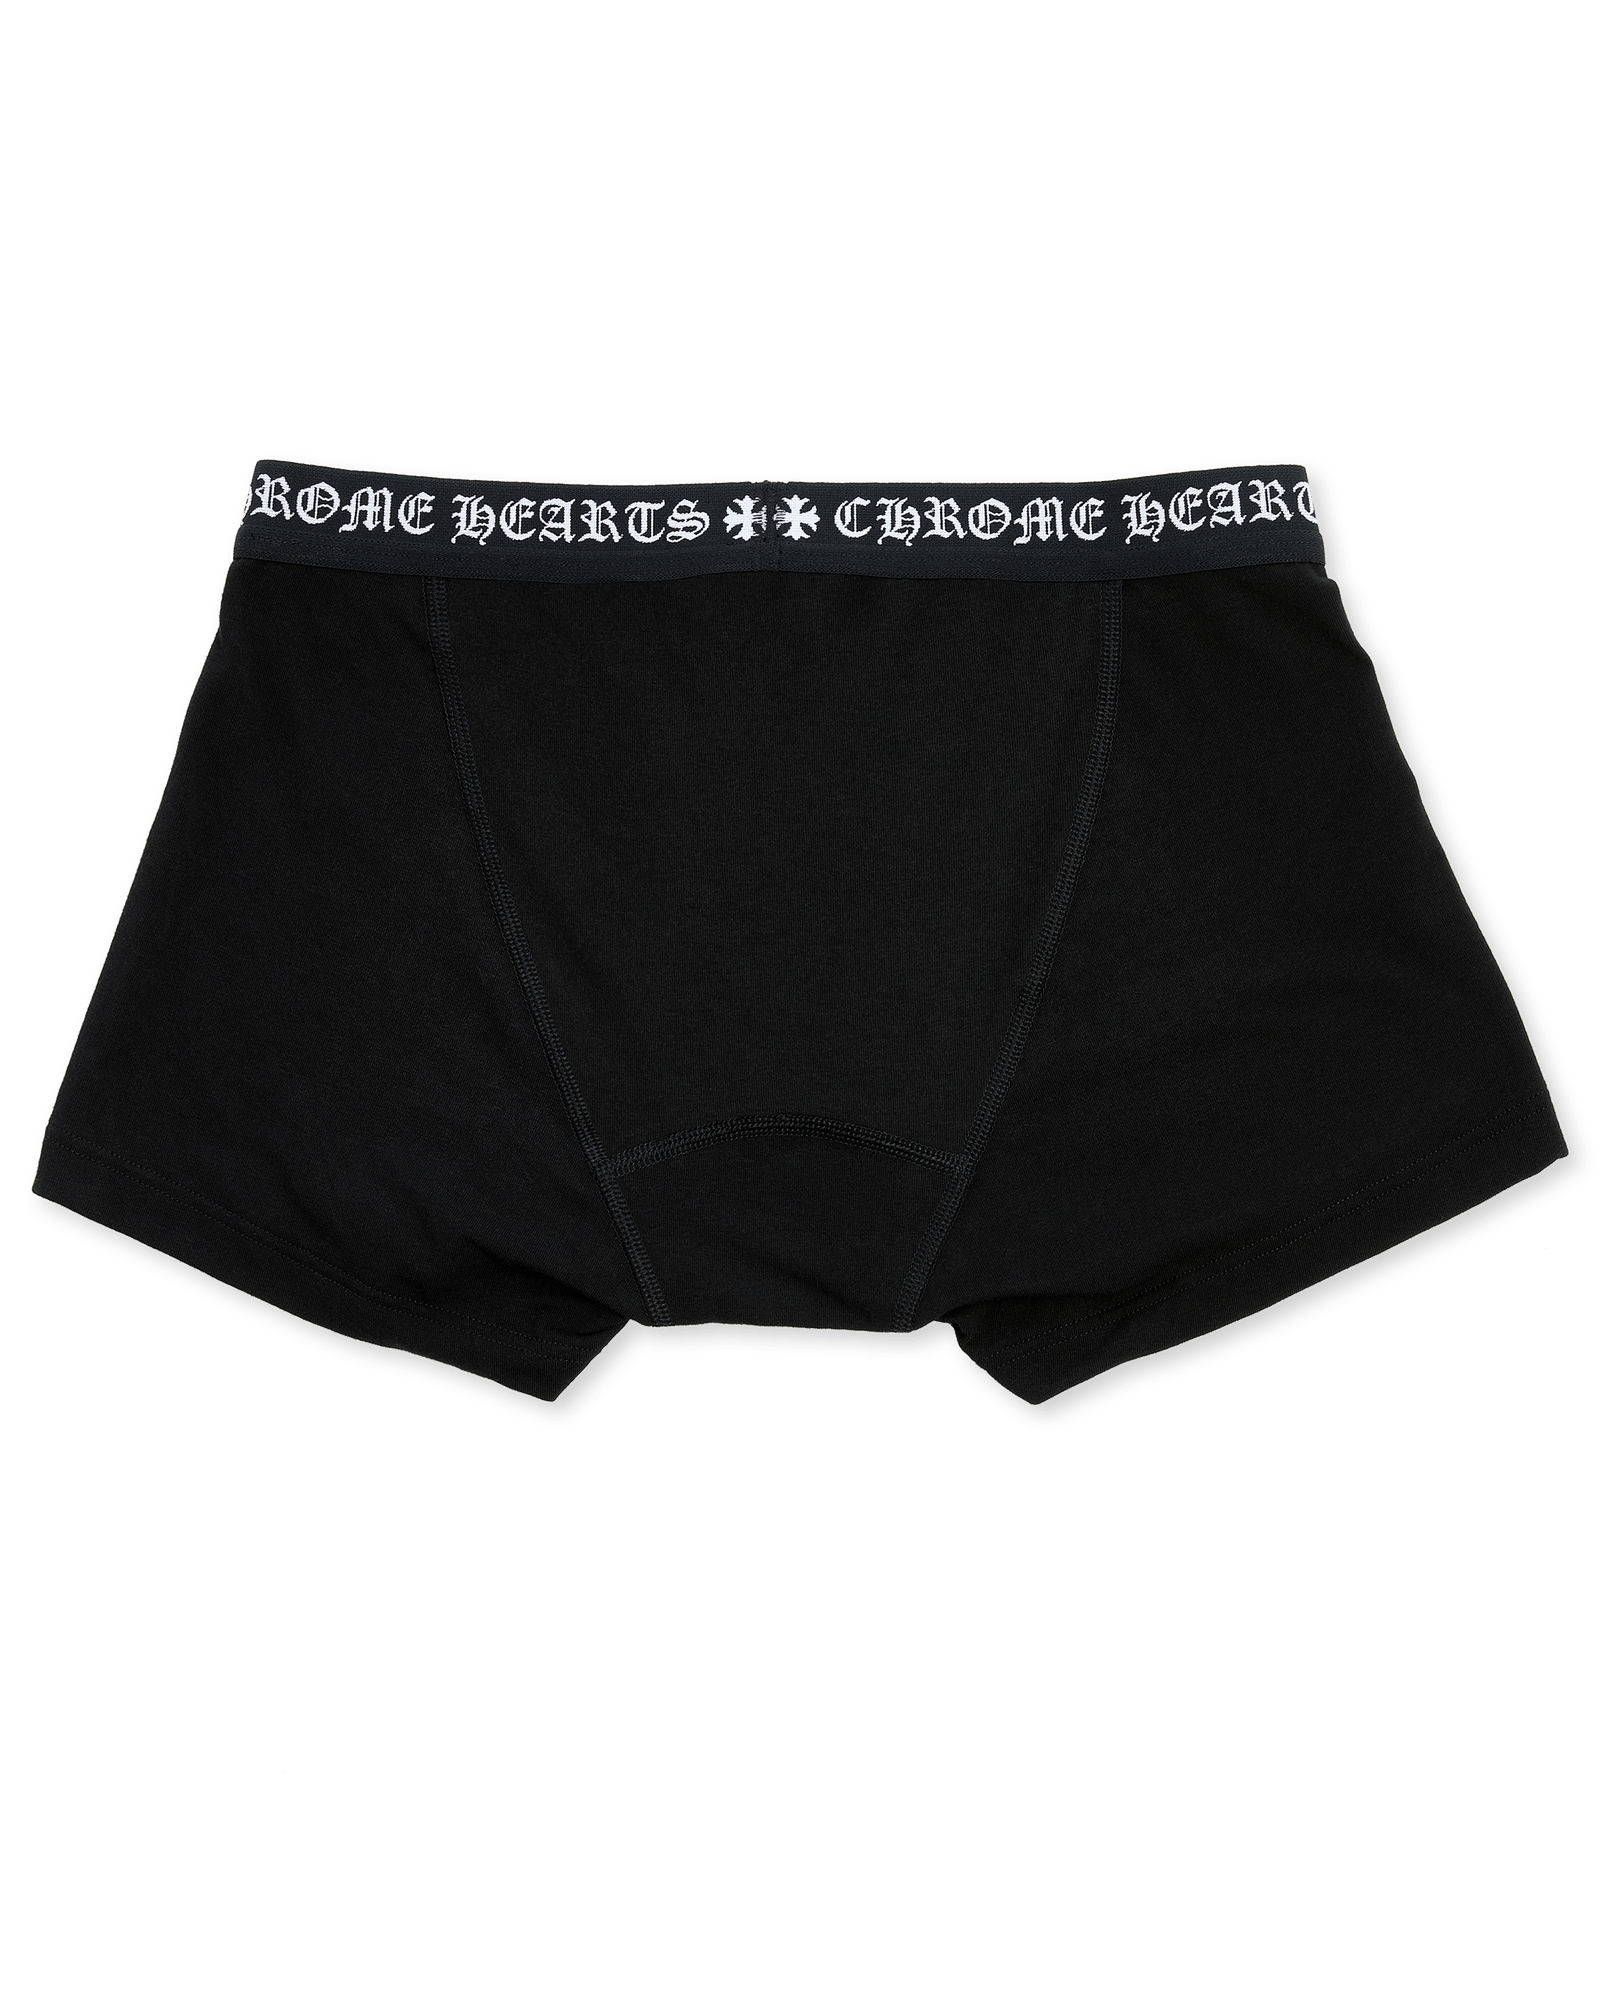 Chrome Hearts Horseshoe Boxer Brief Shorts Black / White - Supra Sneakers